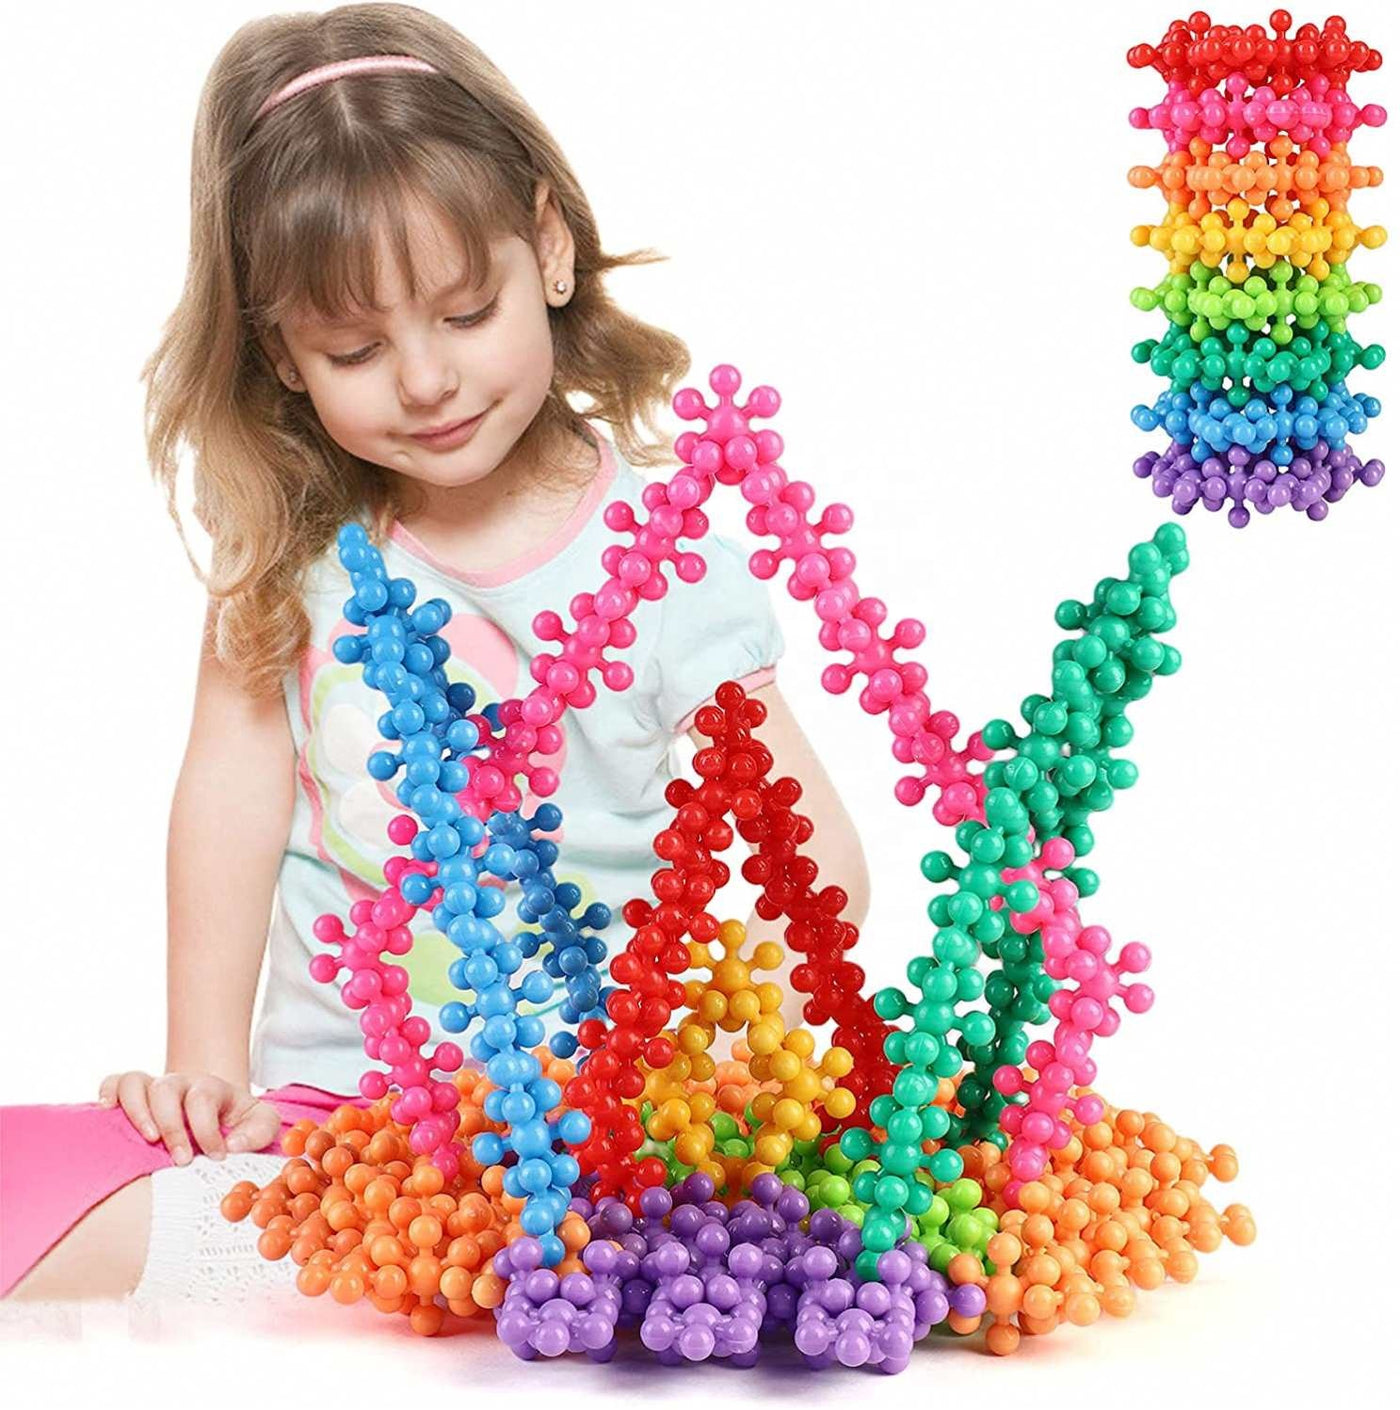 200 Pieces 3D Interlocking Building Blocks STEM Toy